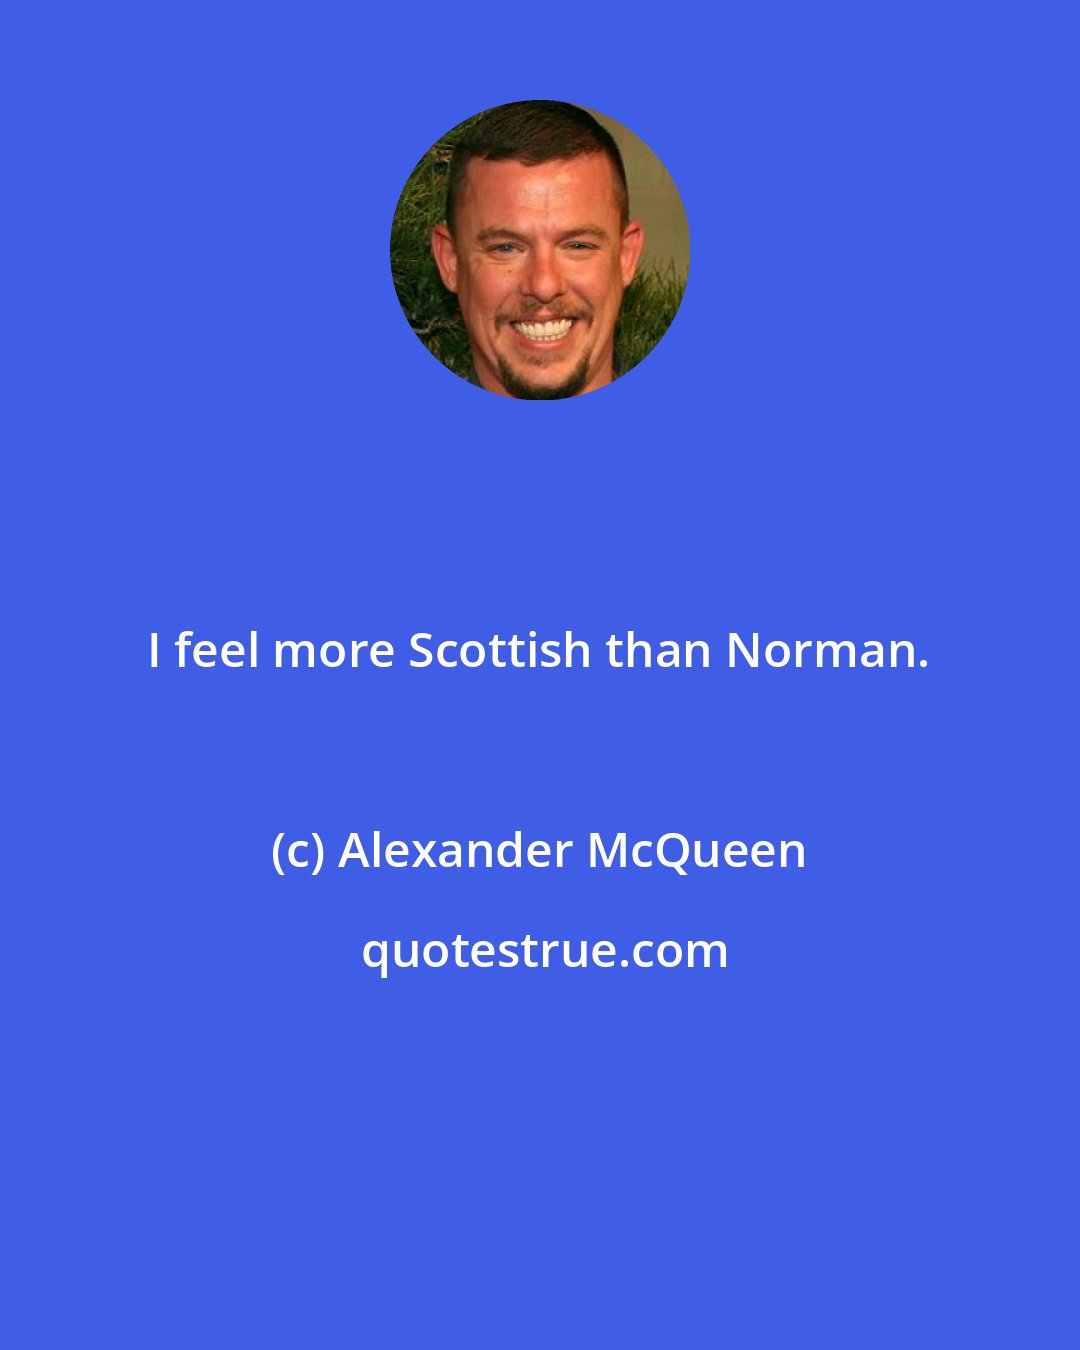 Alexander McQueen: I feel more Scottish than Norman.